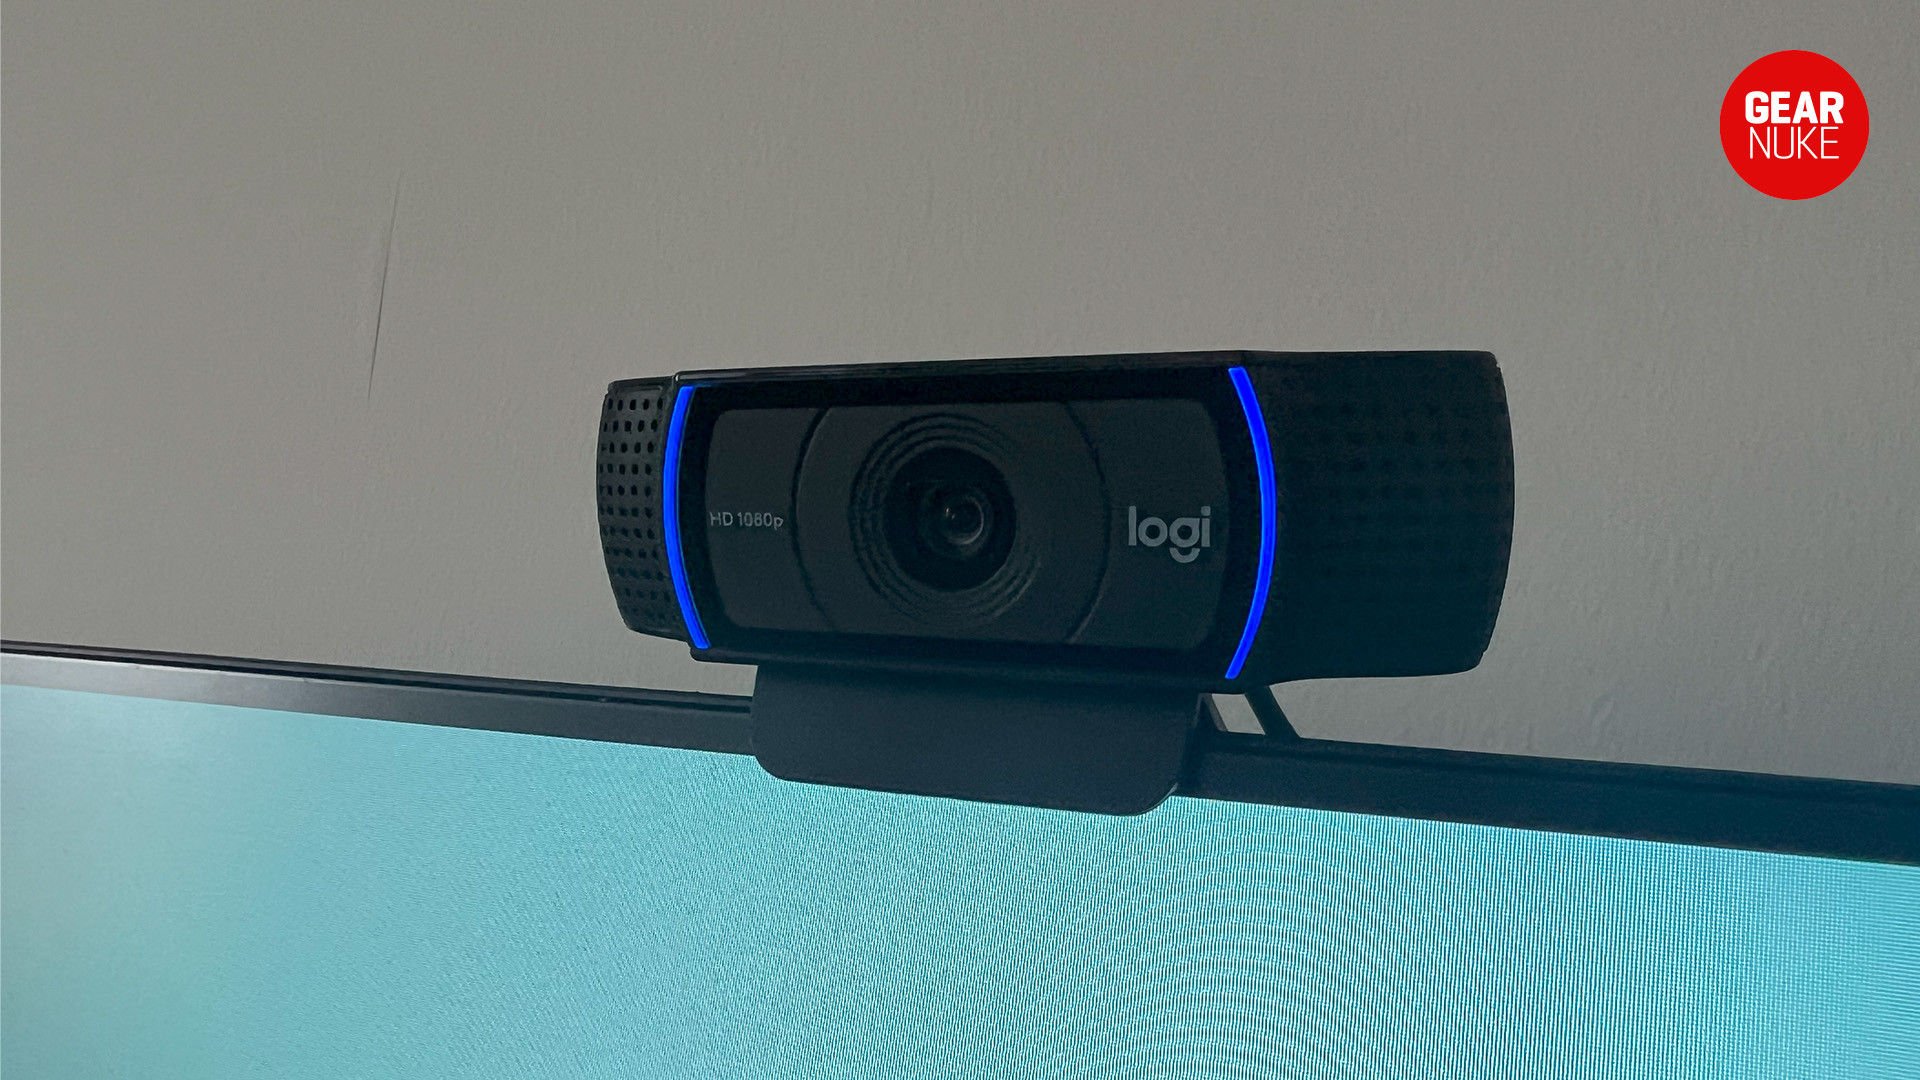 Logitech C920 HD Pro Webcam - 1080p, Optical, Full HD Streaming